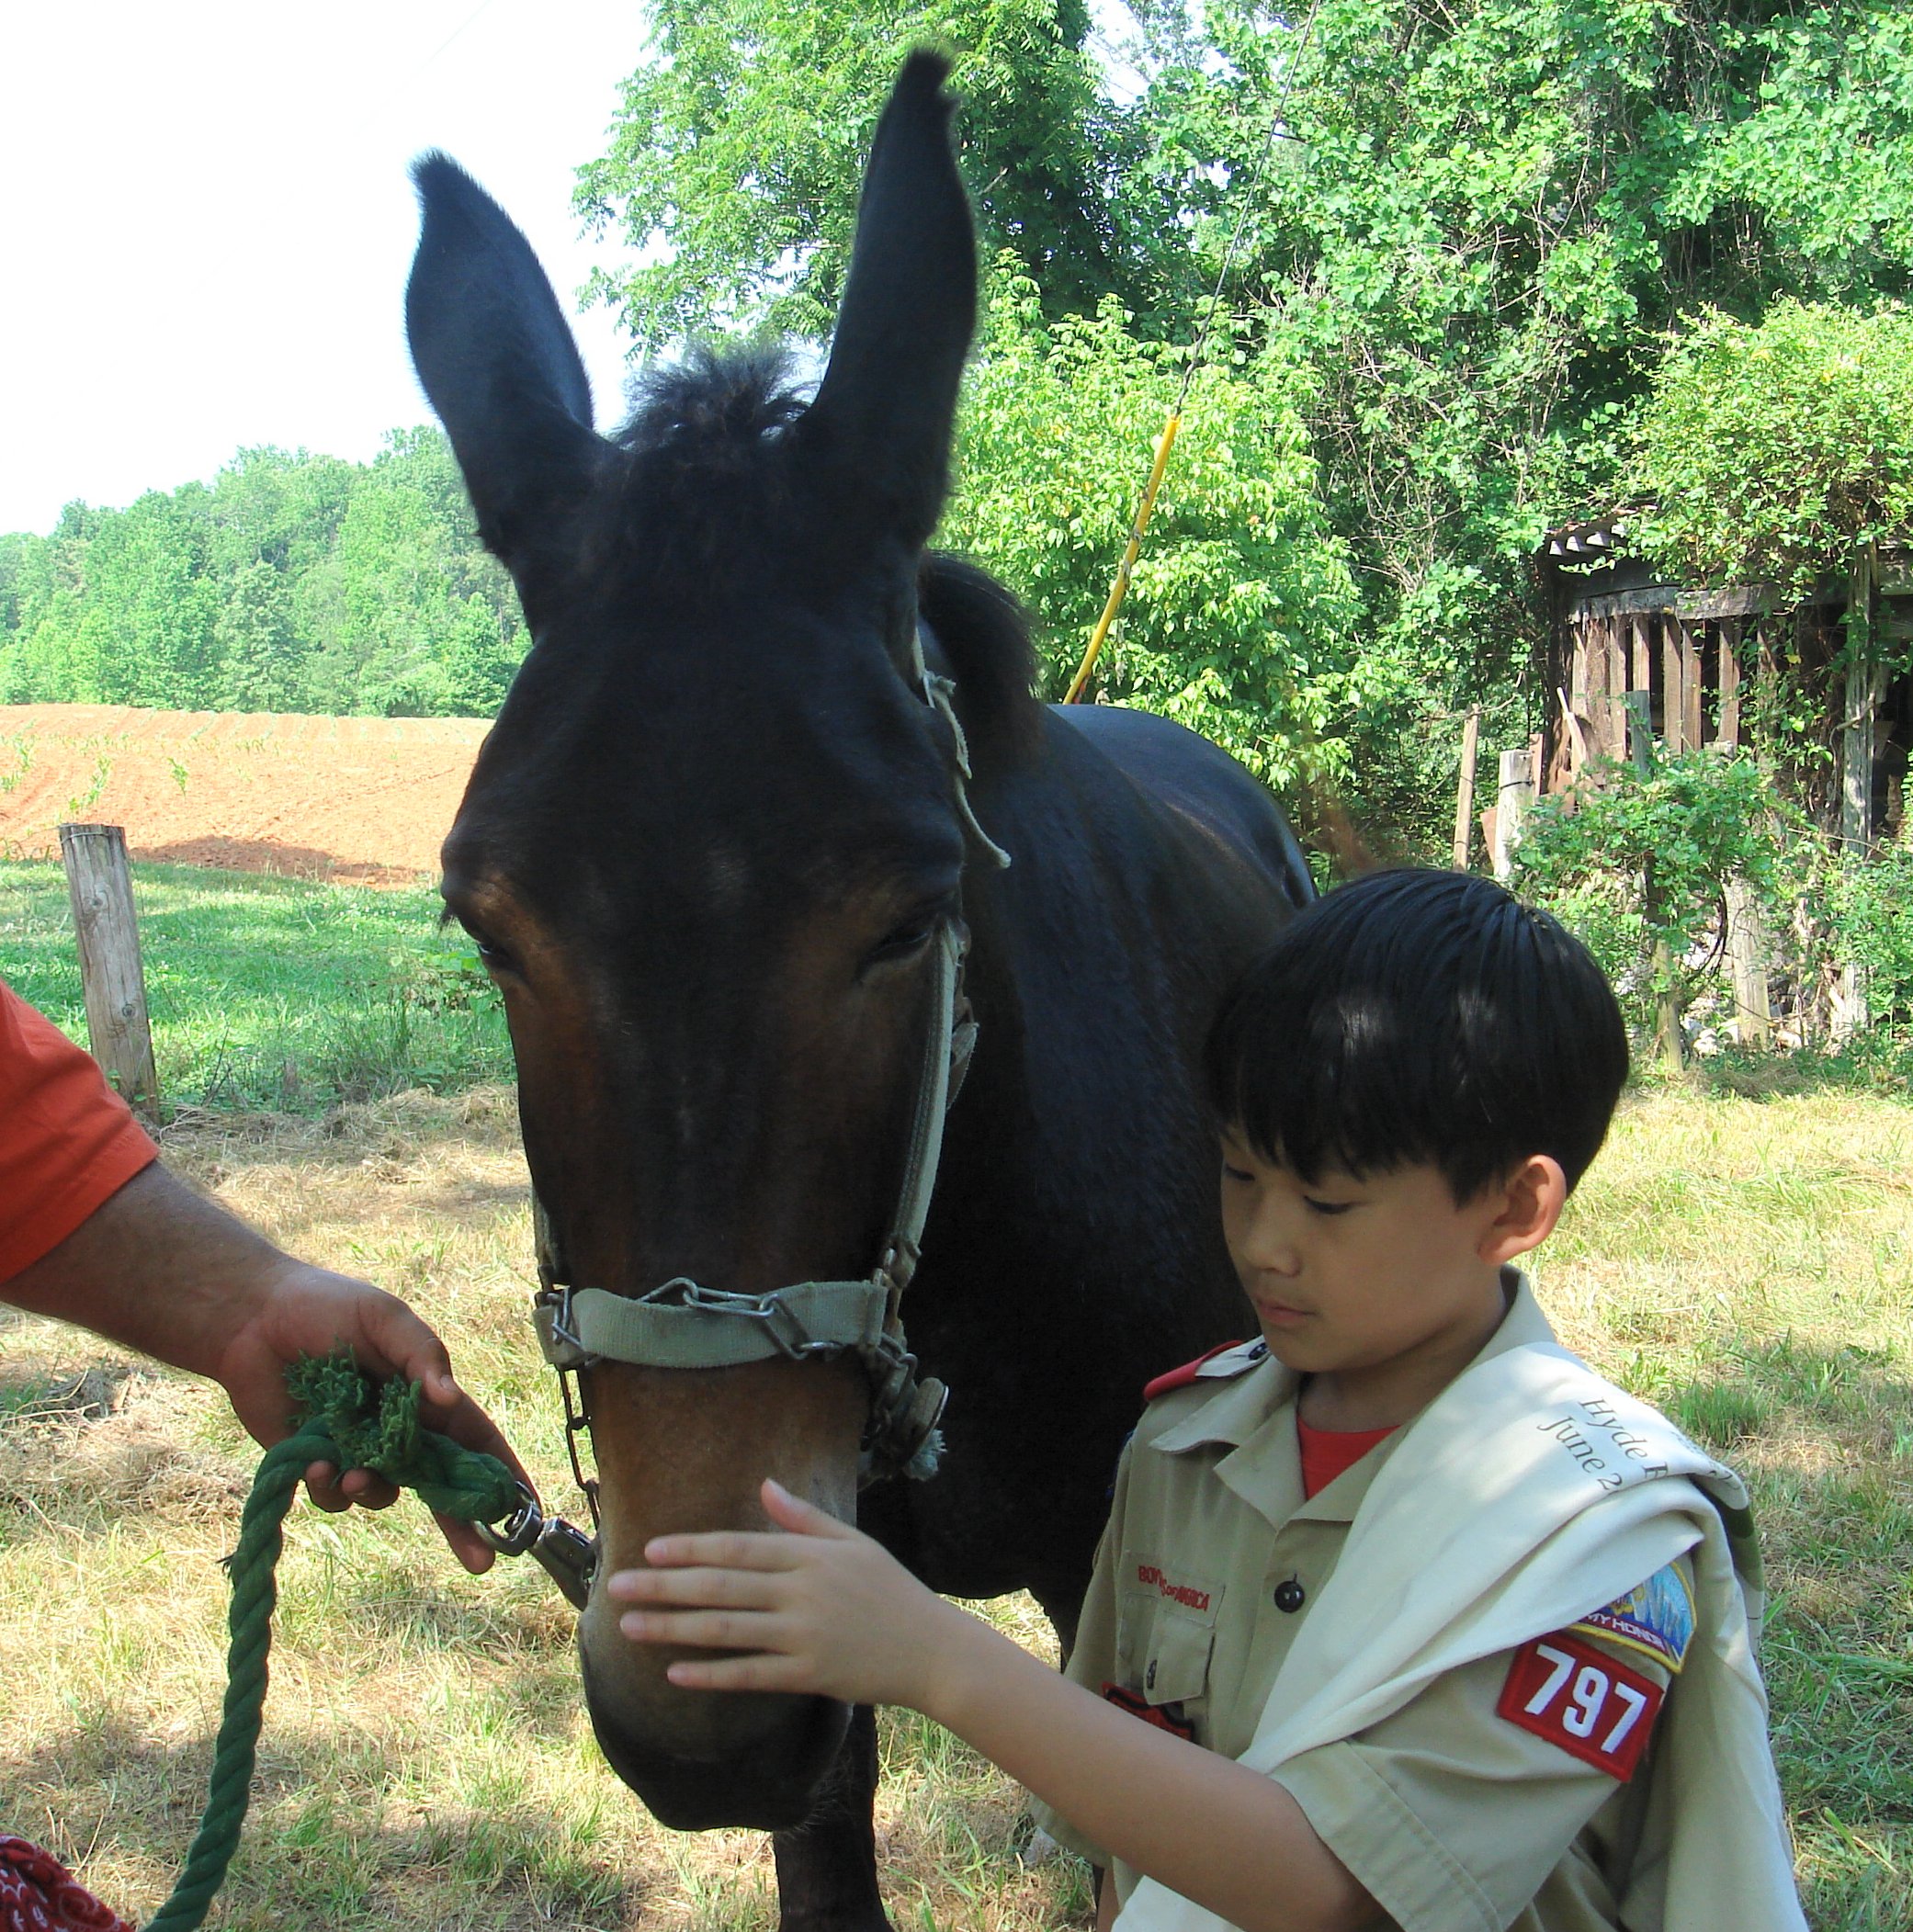 A boy is petting a donkey.